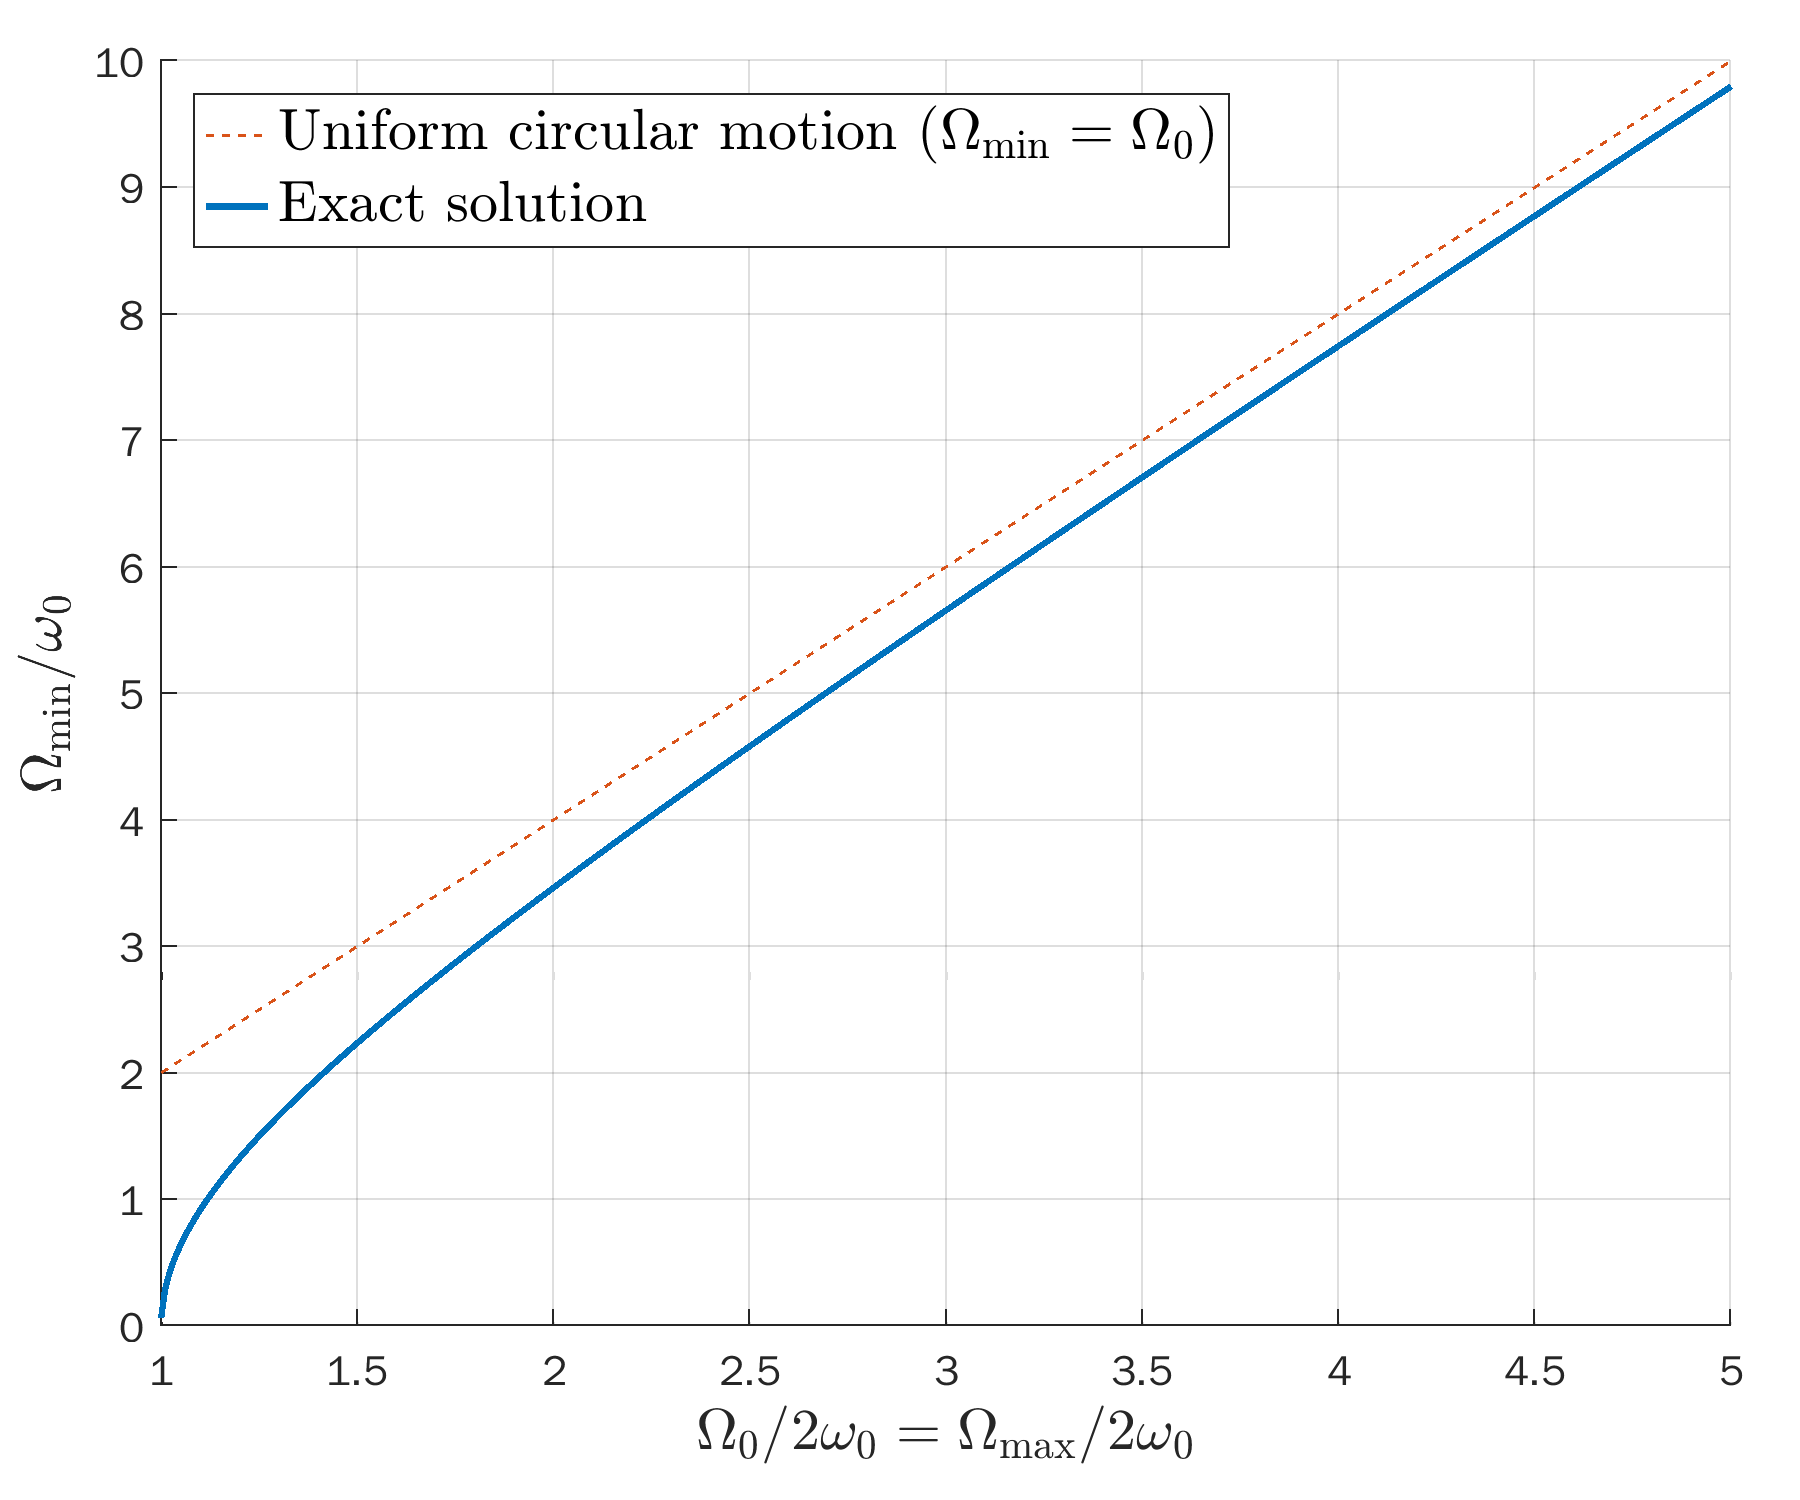 Pendulum exact solution (open); minimum angular velocity